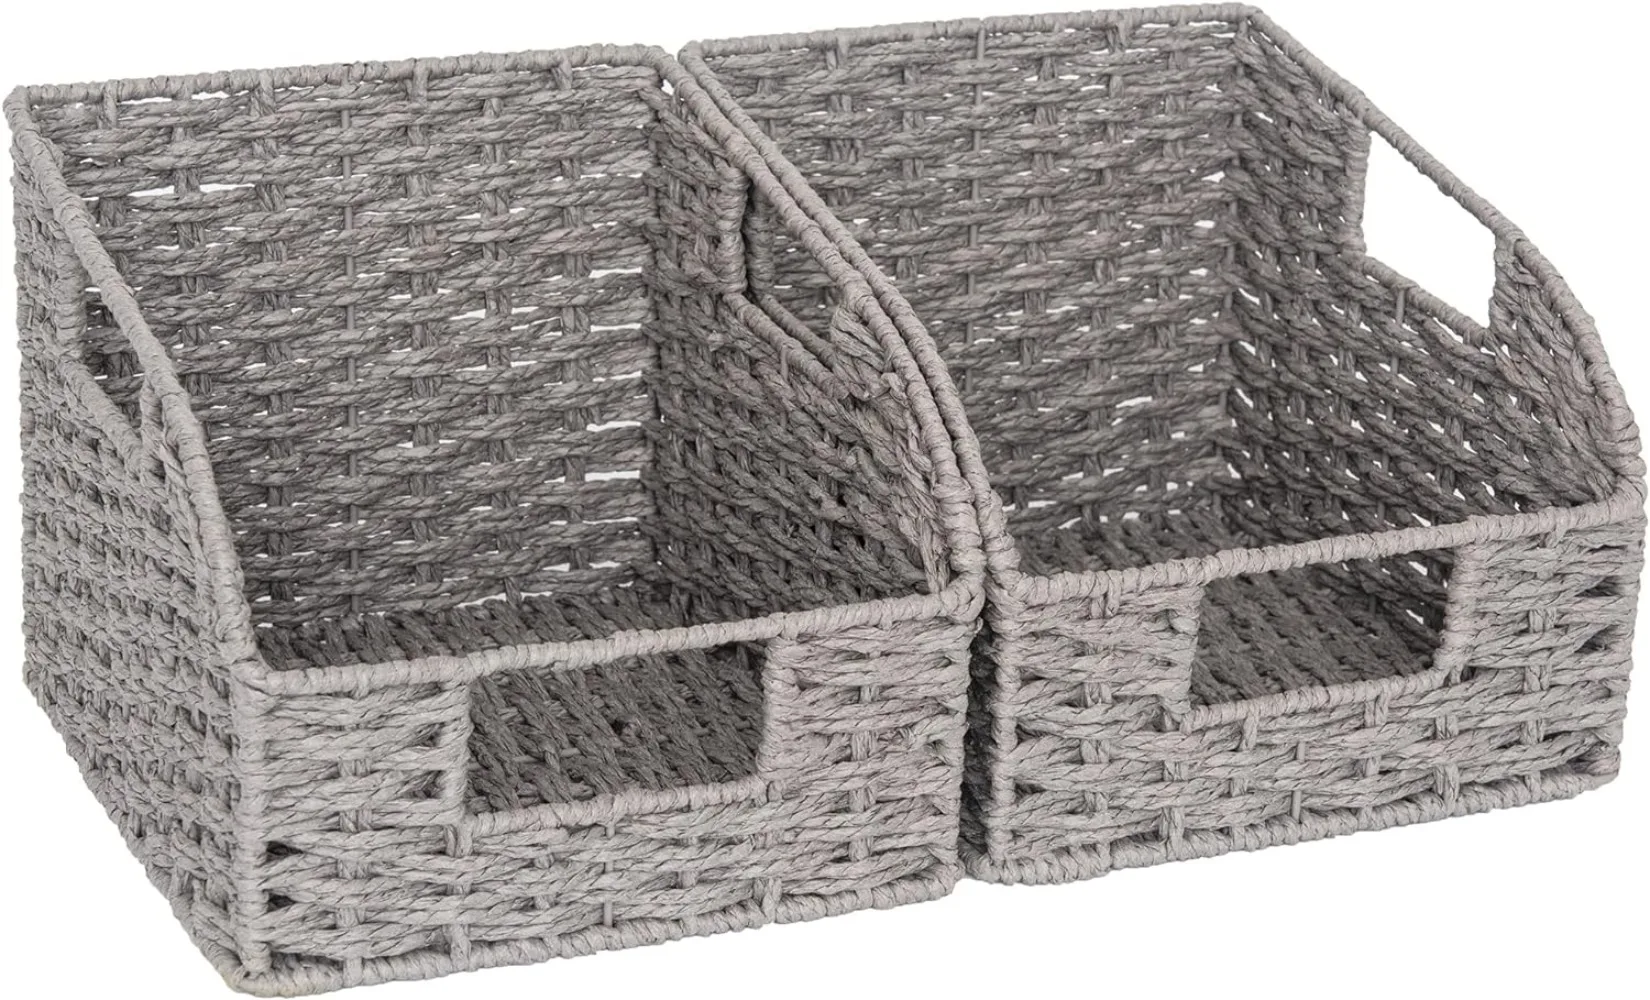 

StorageWorks Pantry Storage Baskets for Organizing, Kitchen Counter Basket with Built-in Handles, Handwoven Kitchen Storage